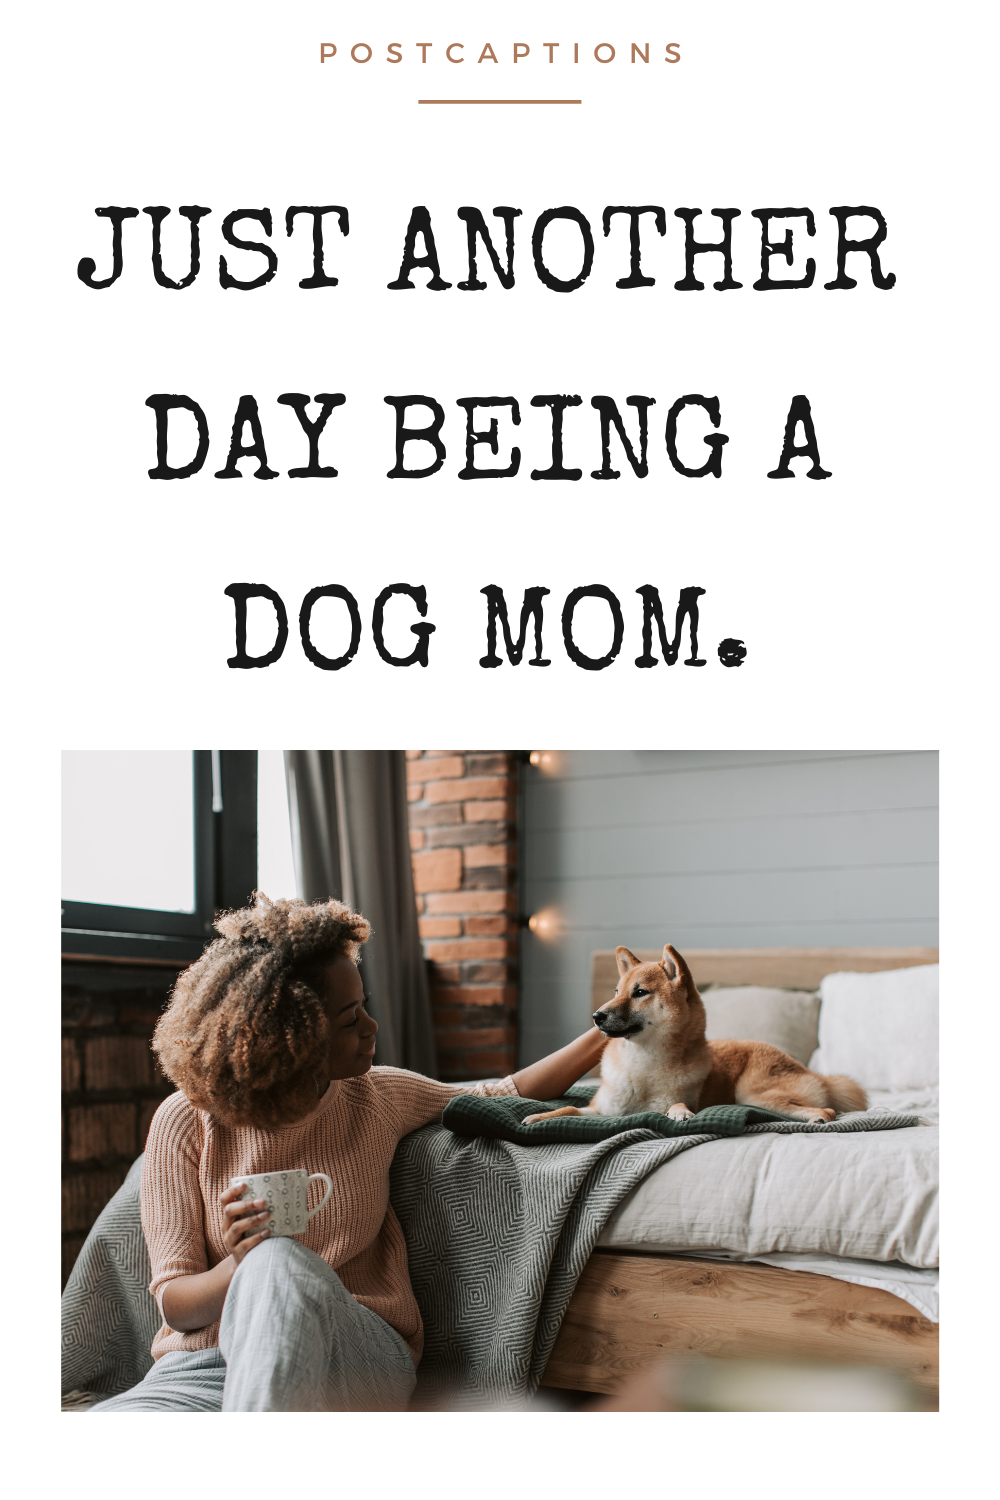 Dog mom Instagram captions